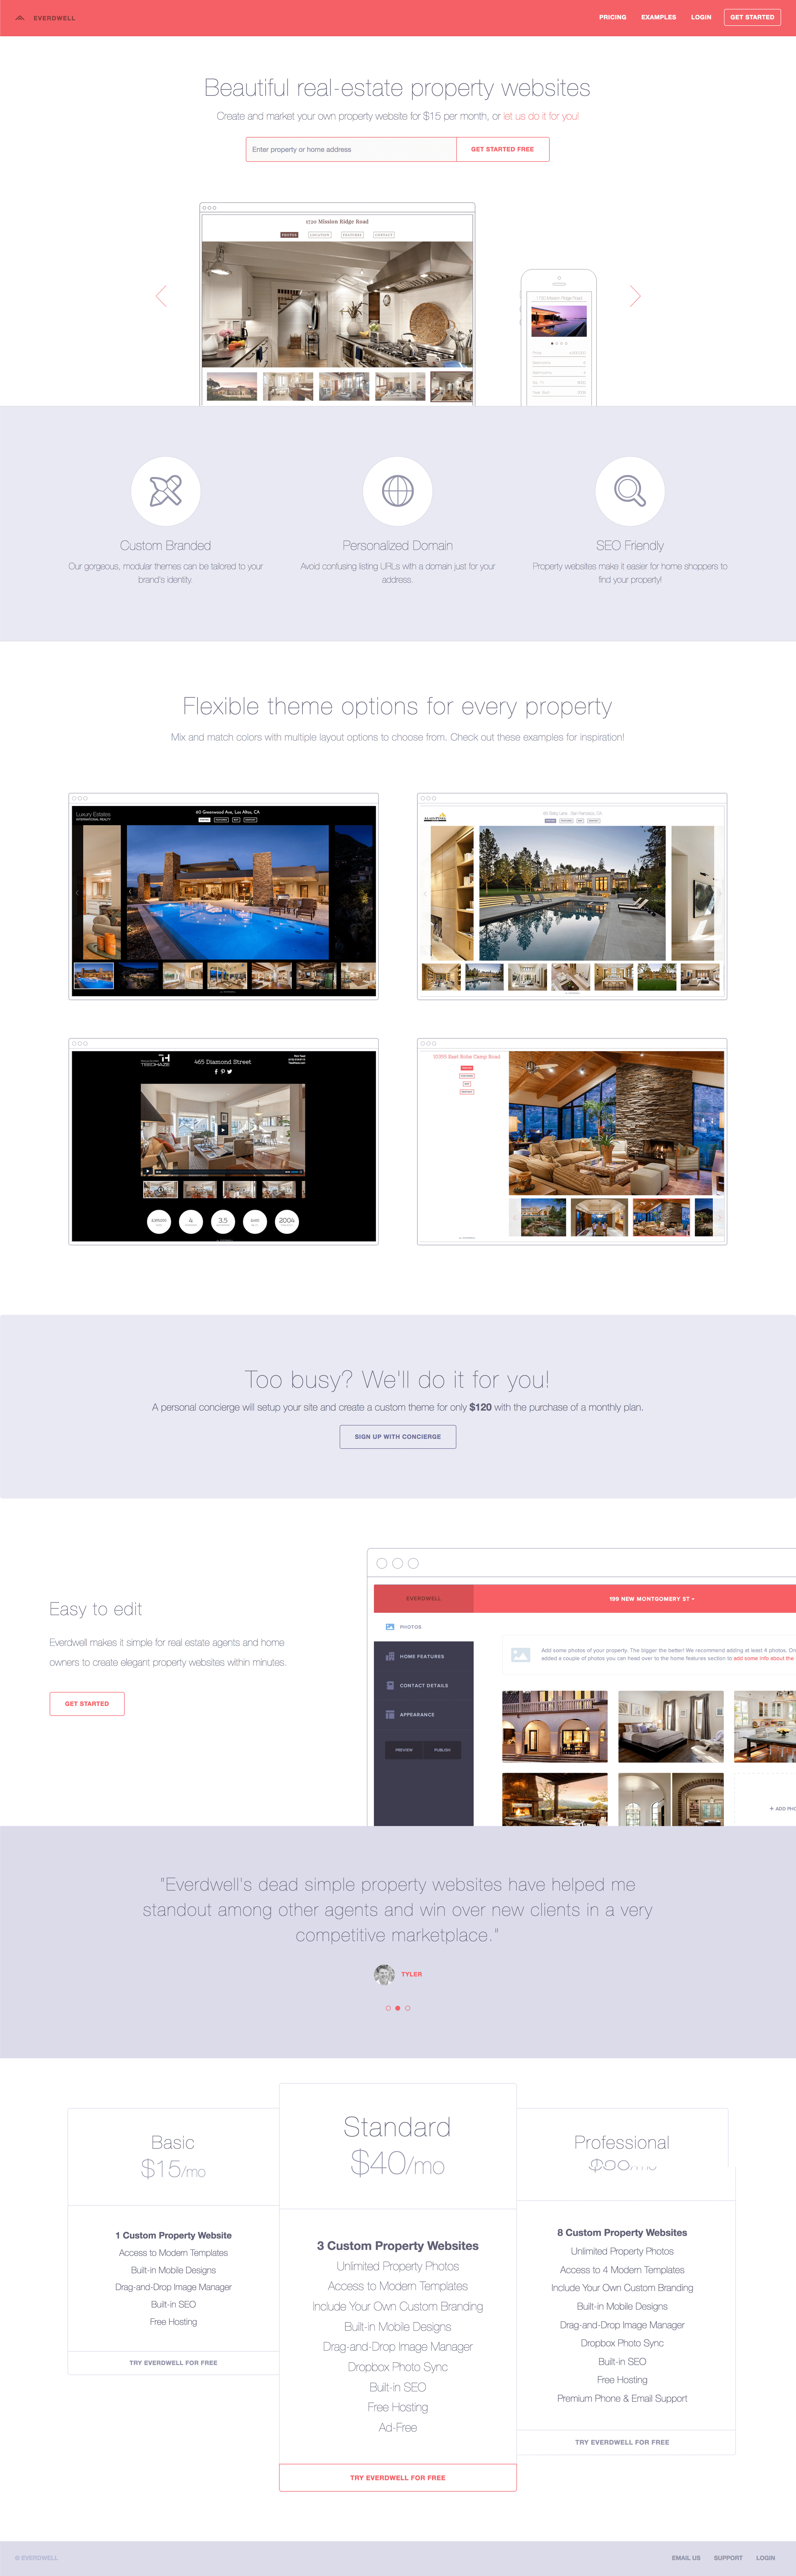 Vida homepage design